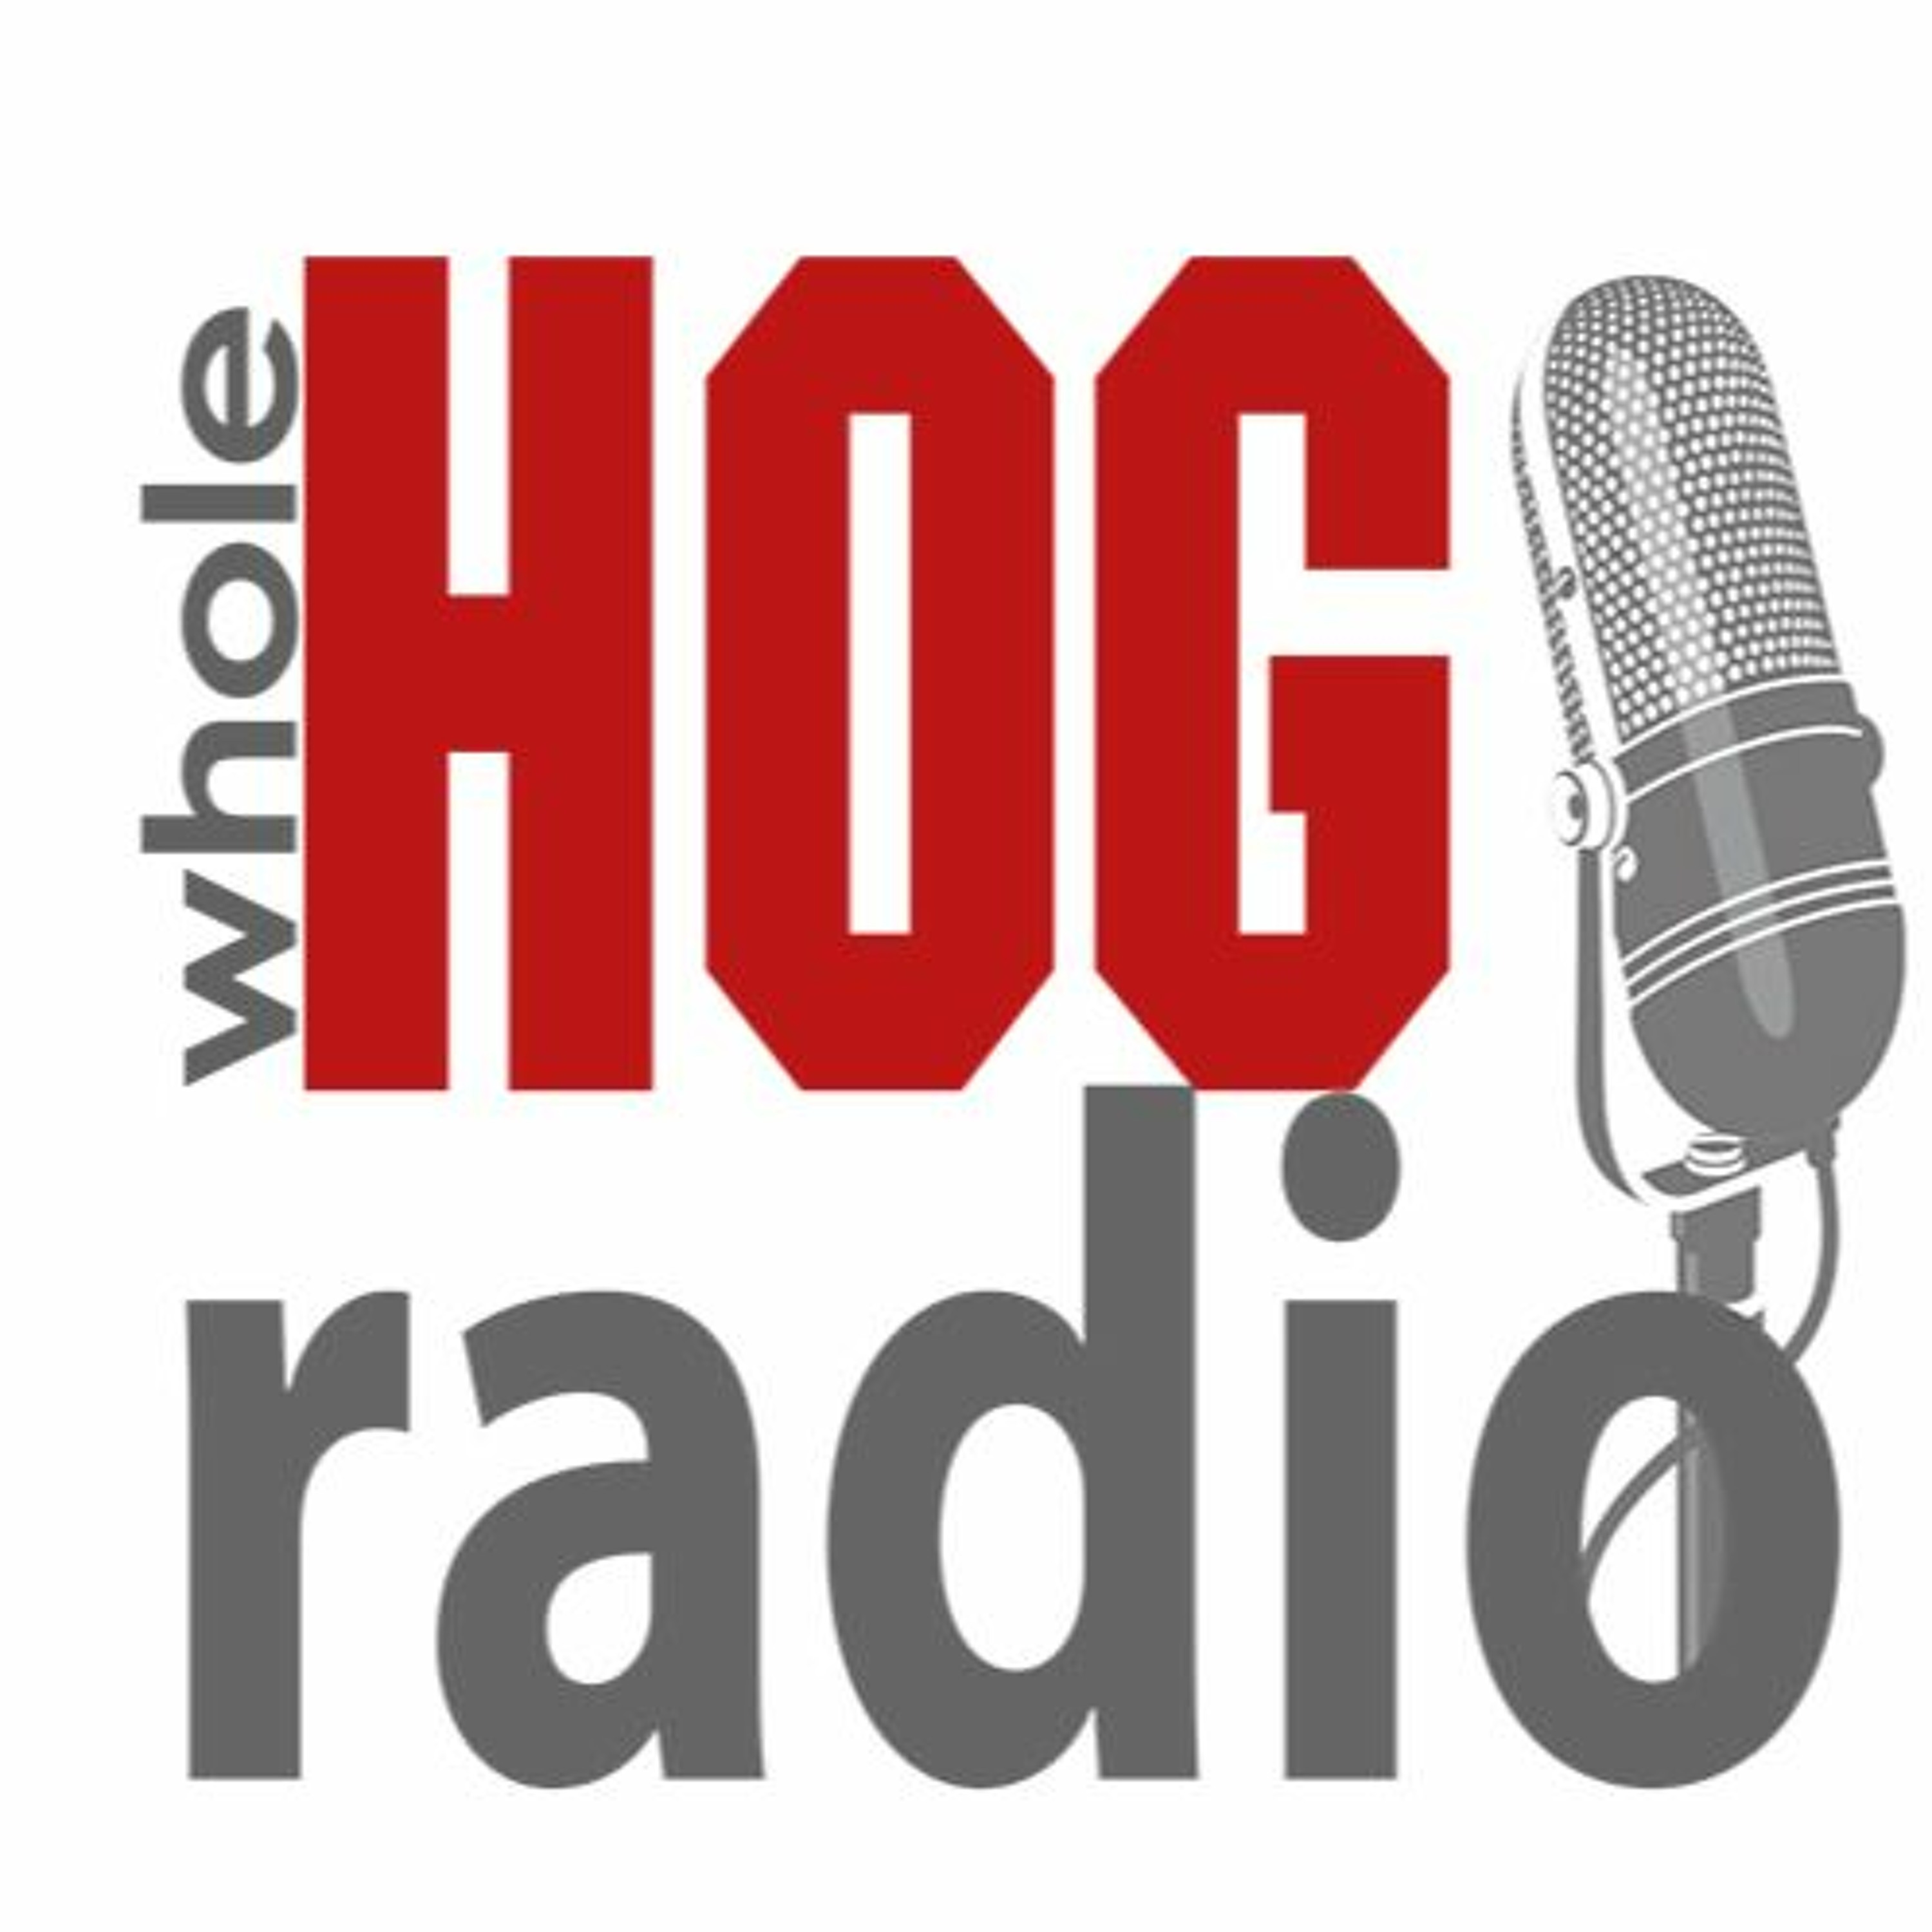 WholeHog Podcast: Jaylen Barford interview, athletes return to campus